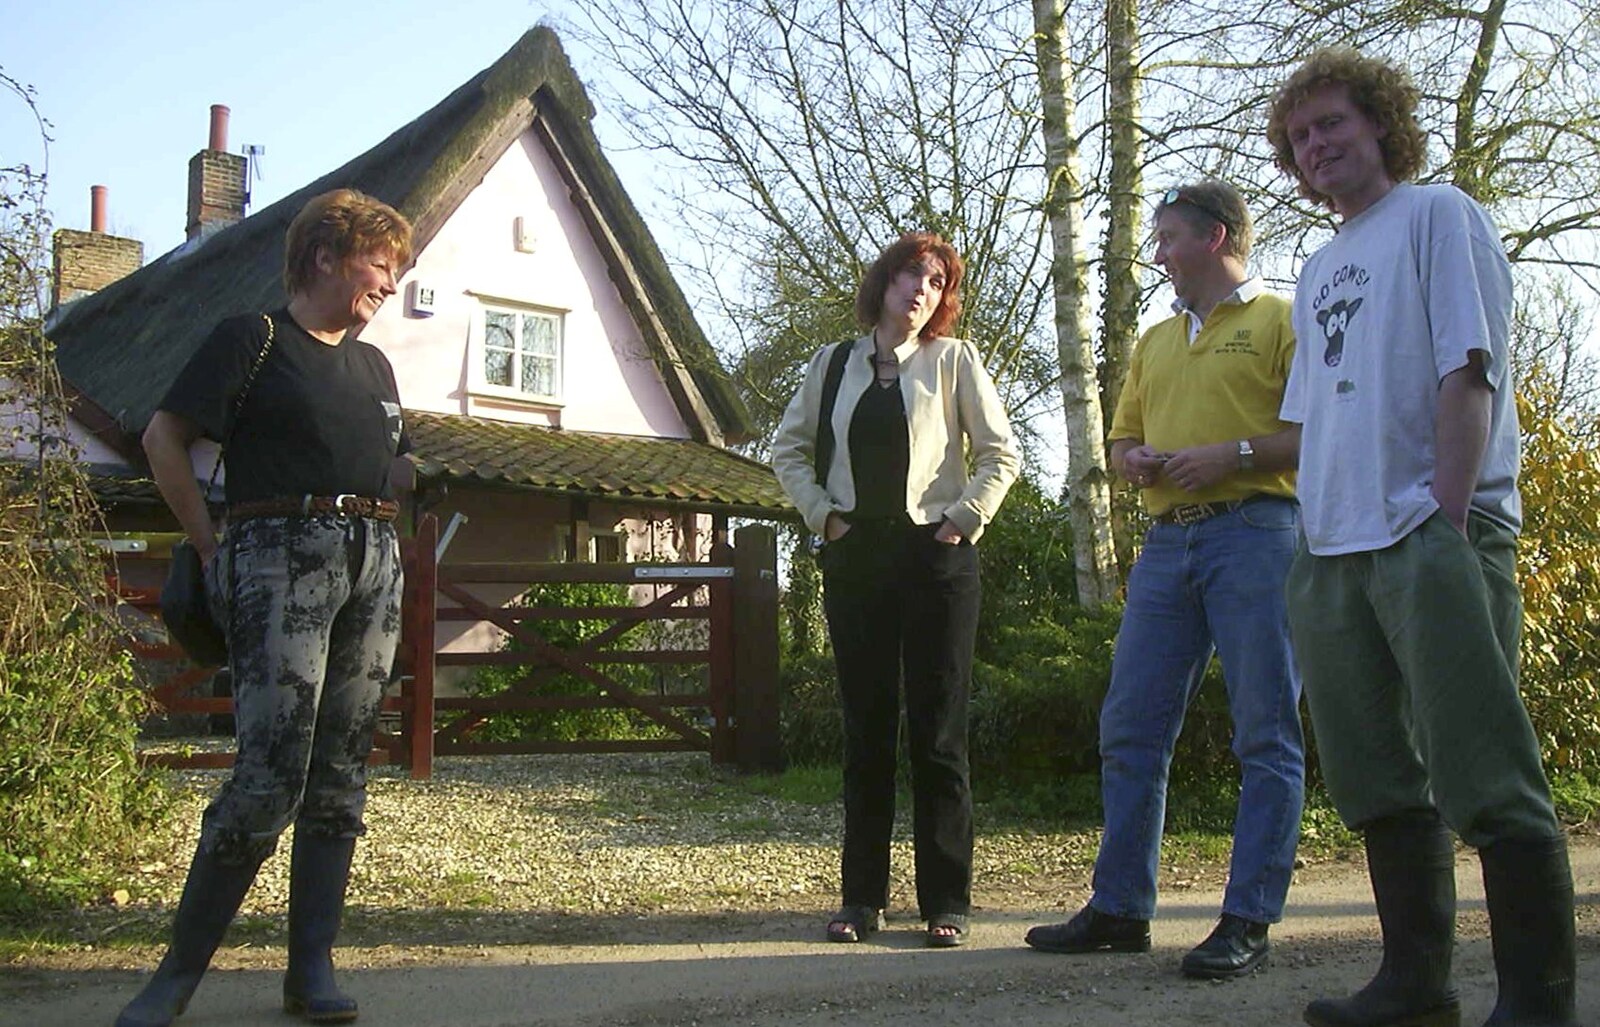 Jenny, Anne, Nigel and Wavy hang around from Carolyn on Sunday, Wymondham, Norfolk - 23rd March 2003